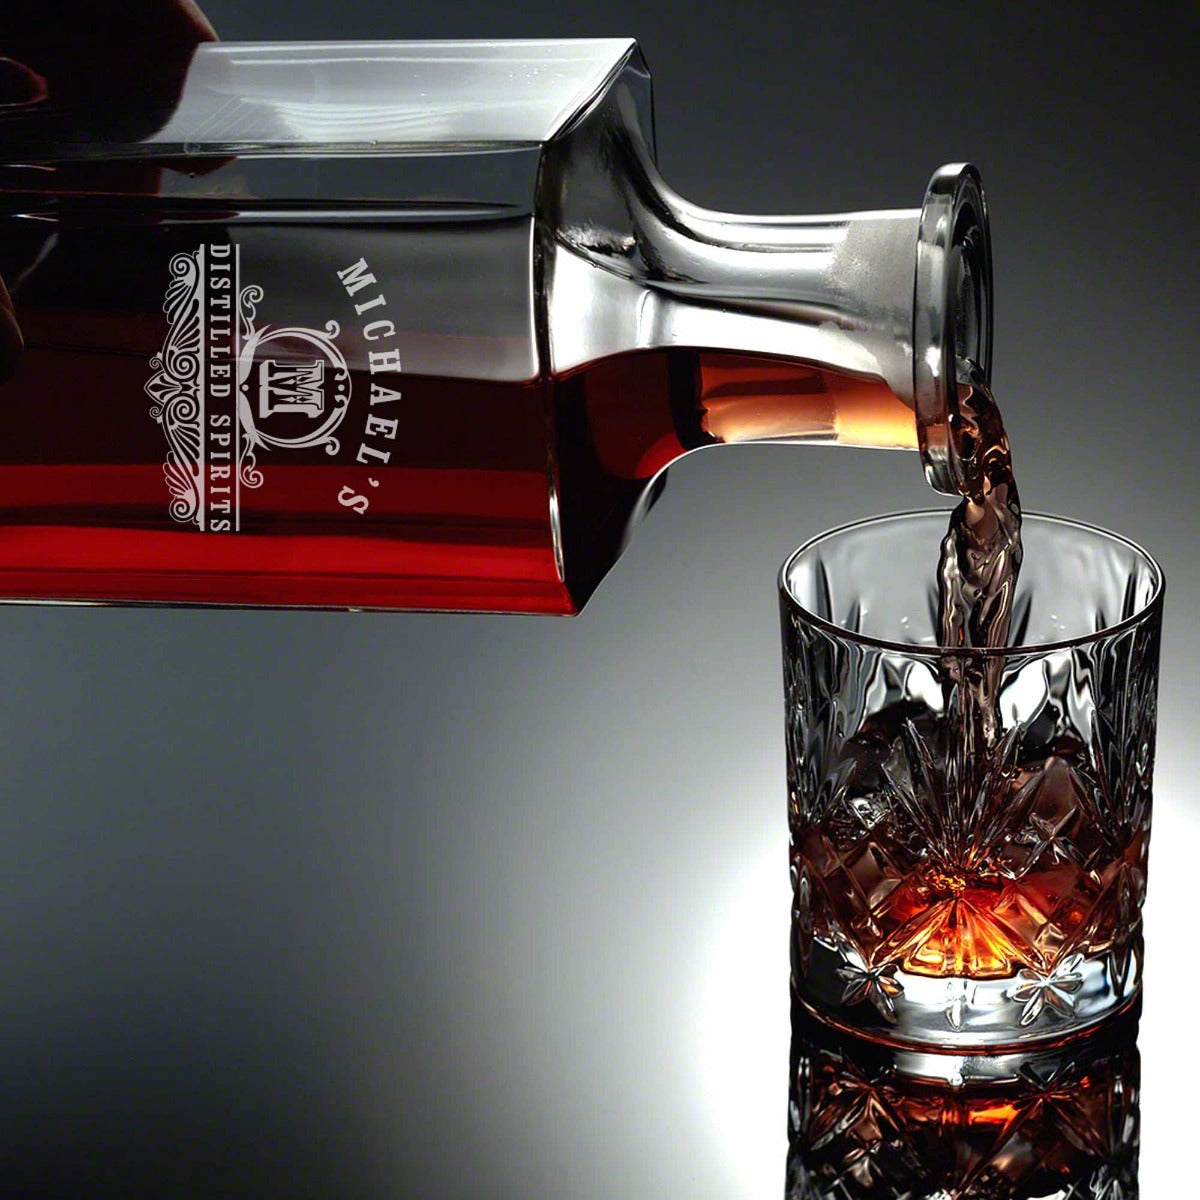 Monogram Whiskey Decanter Set with 4 Square Whiskey Glasses